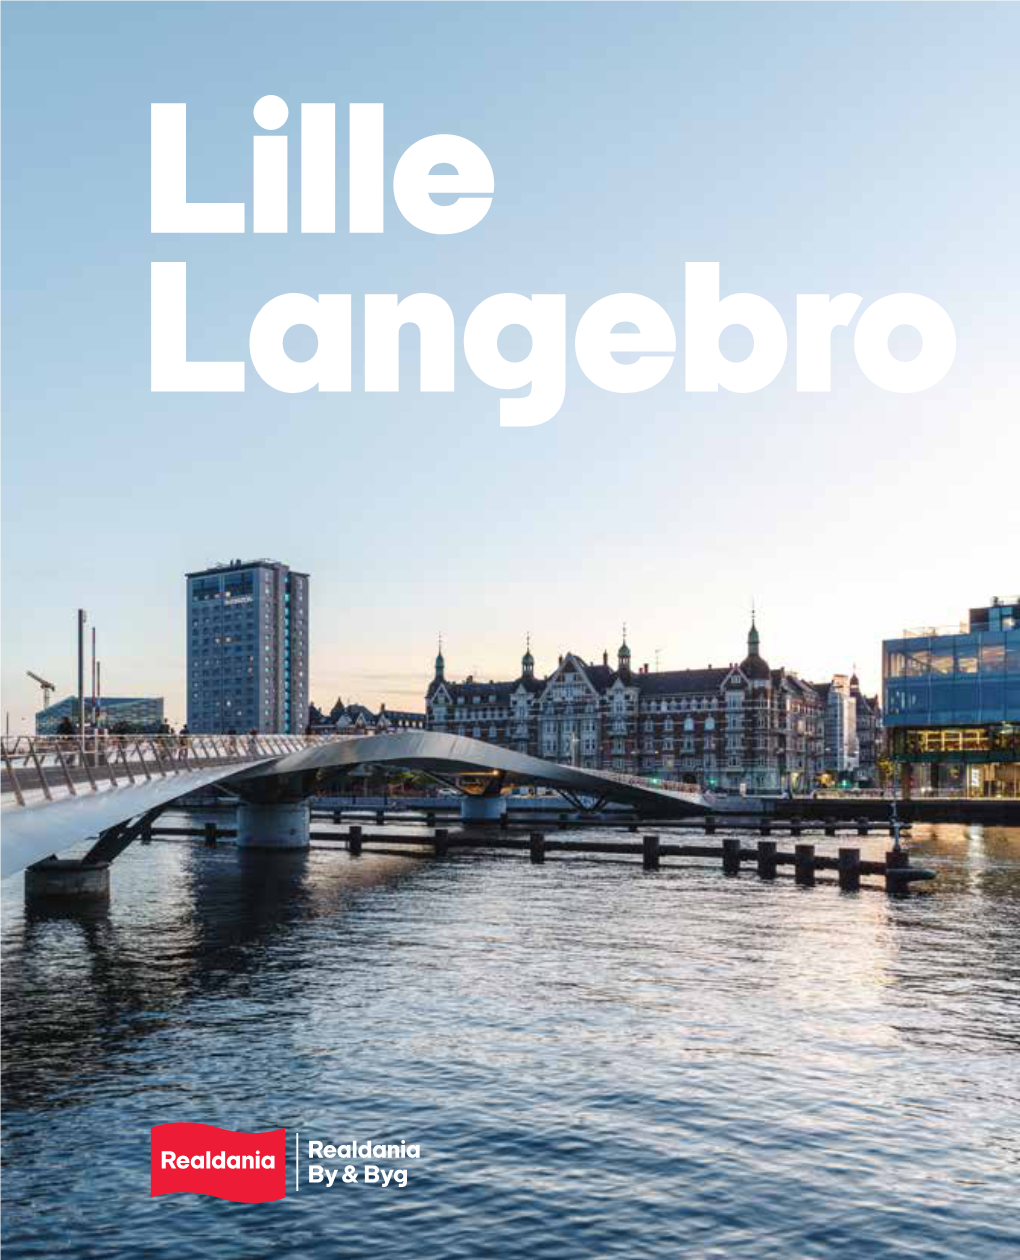 Lille Langebro Lille Langebro 2 3 4 5 Forord